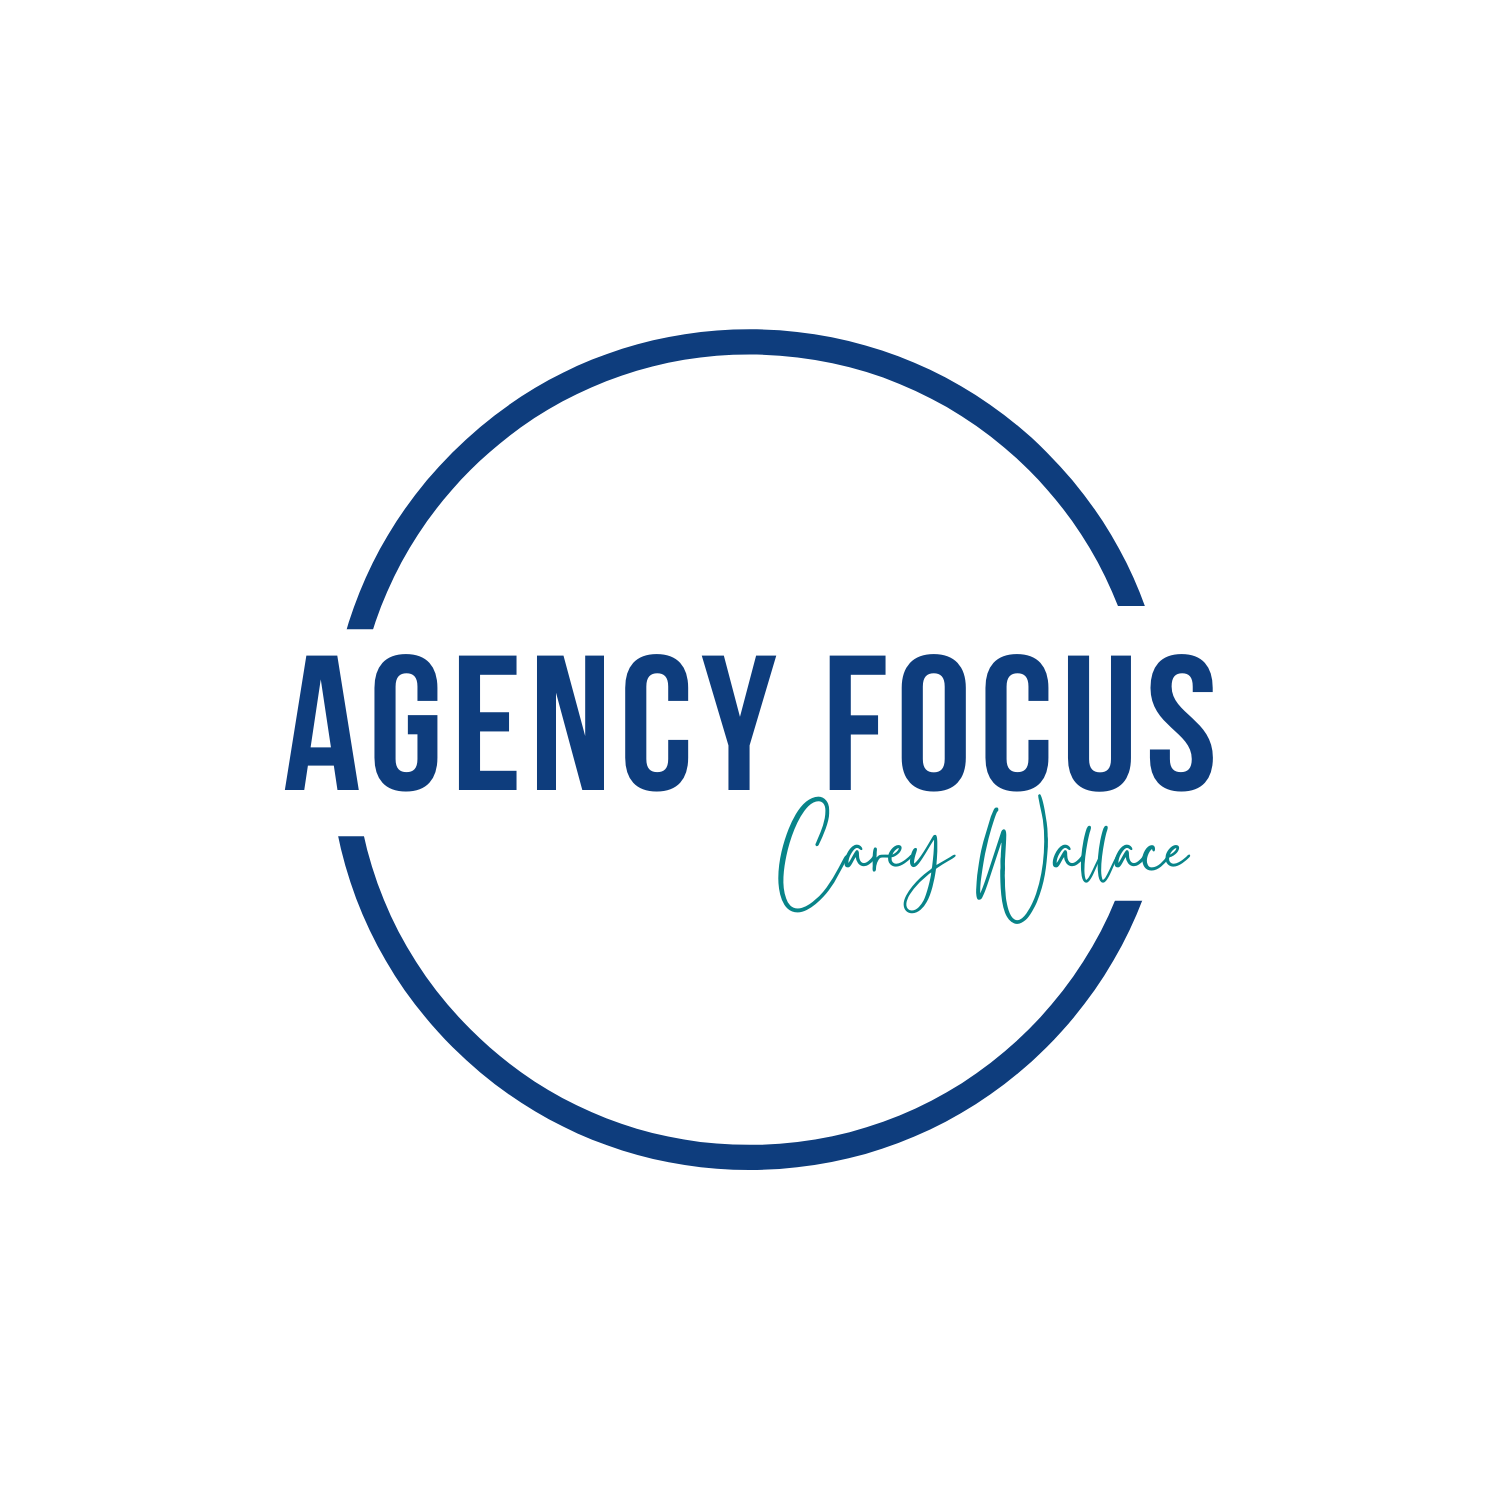 Agency Focus Logo